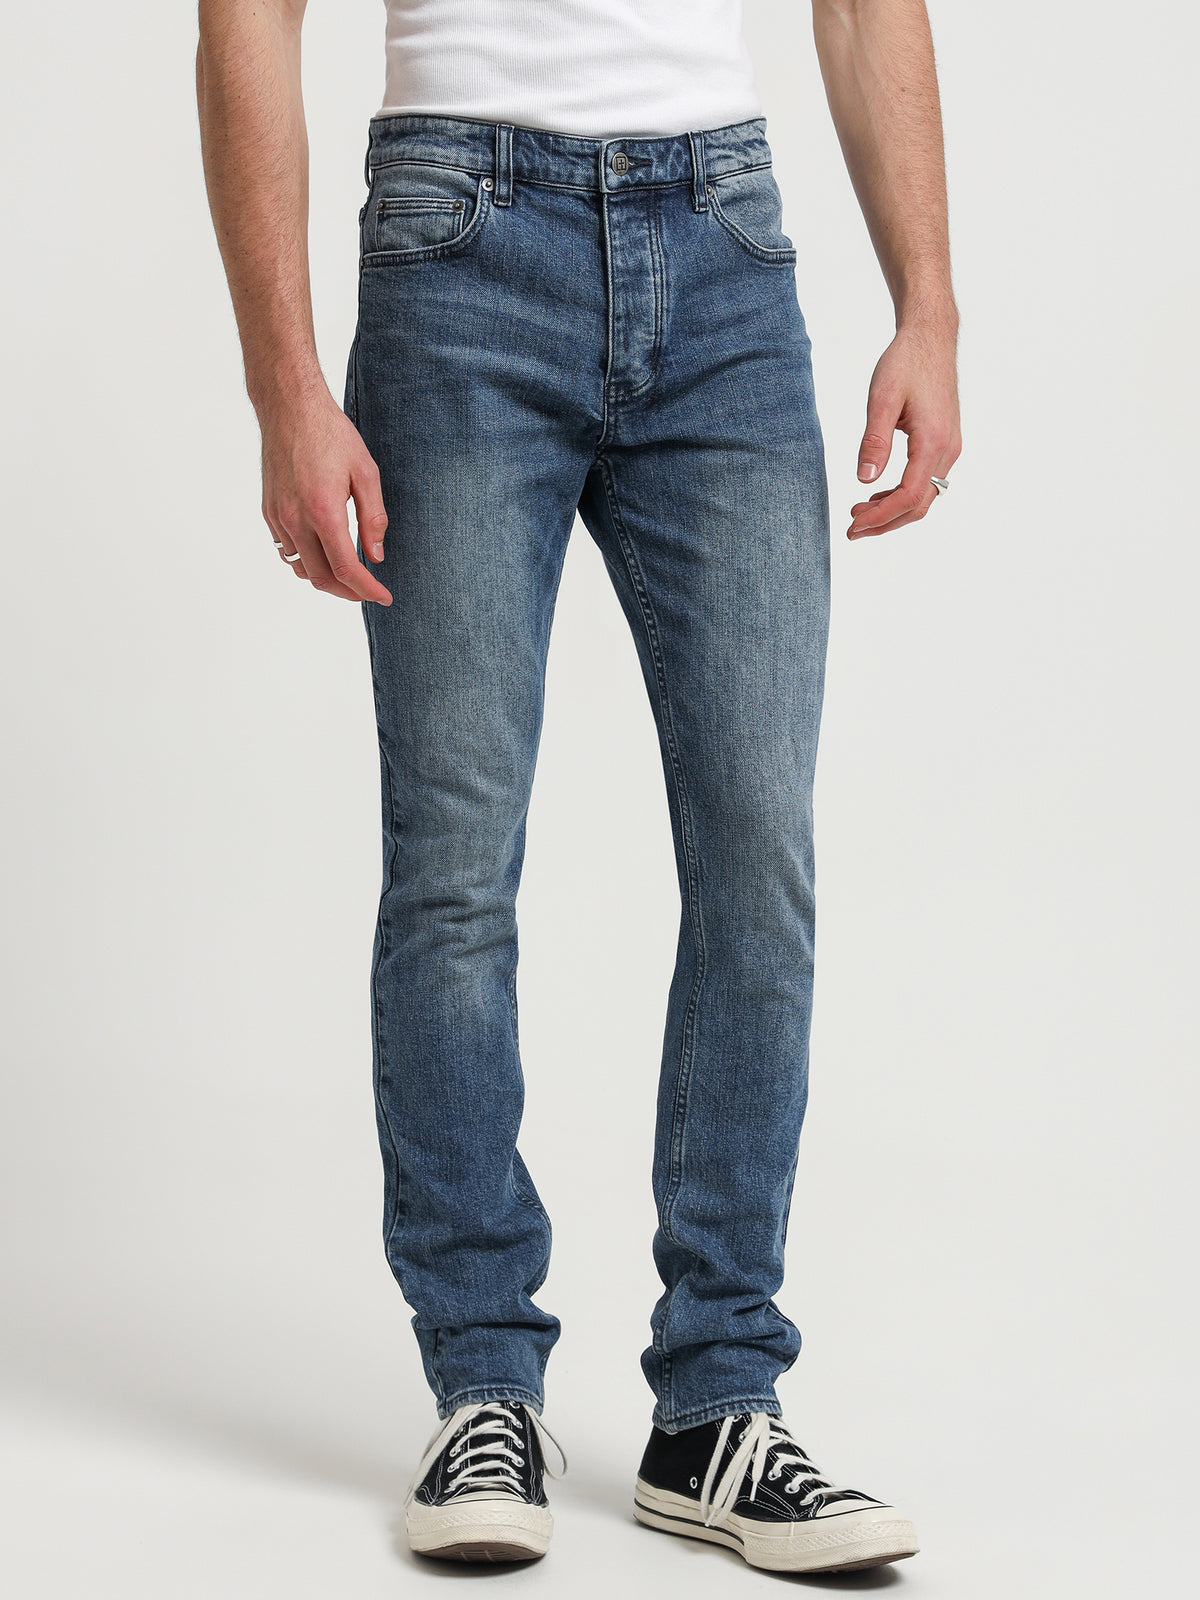 Chitch Korrect Jeans in Denim